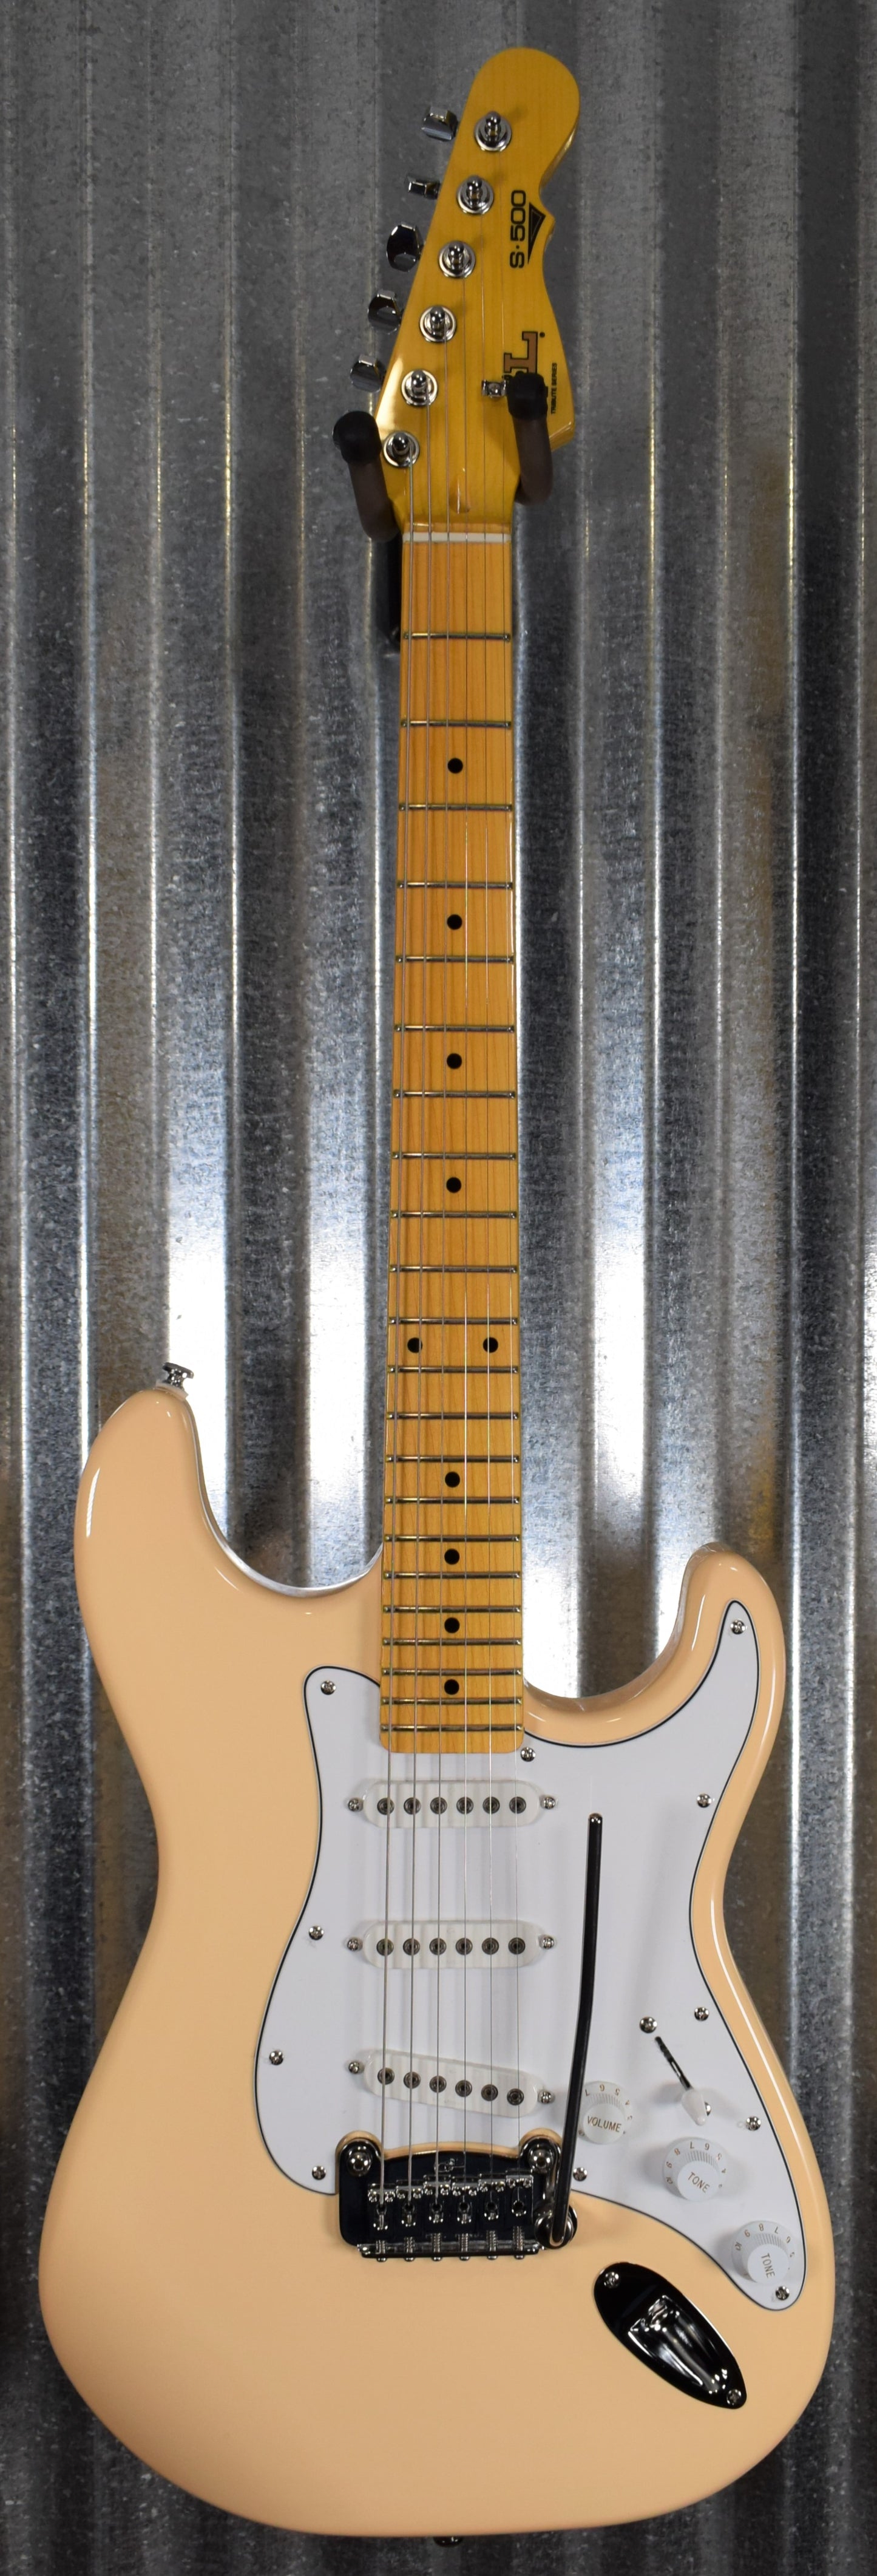 G&L Tribute S500 Vintage White Guitar #3097 Demo